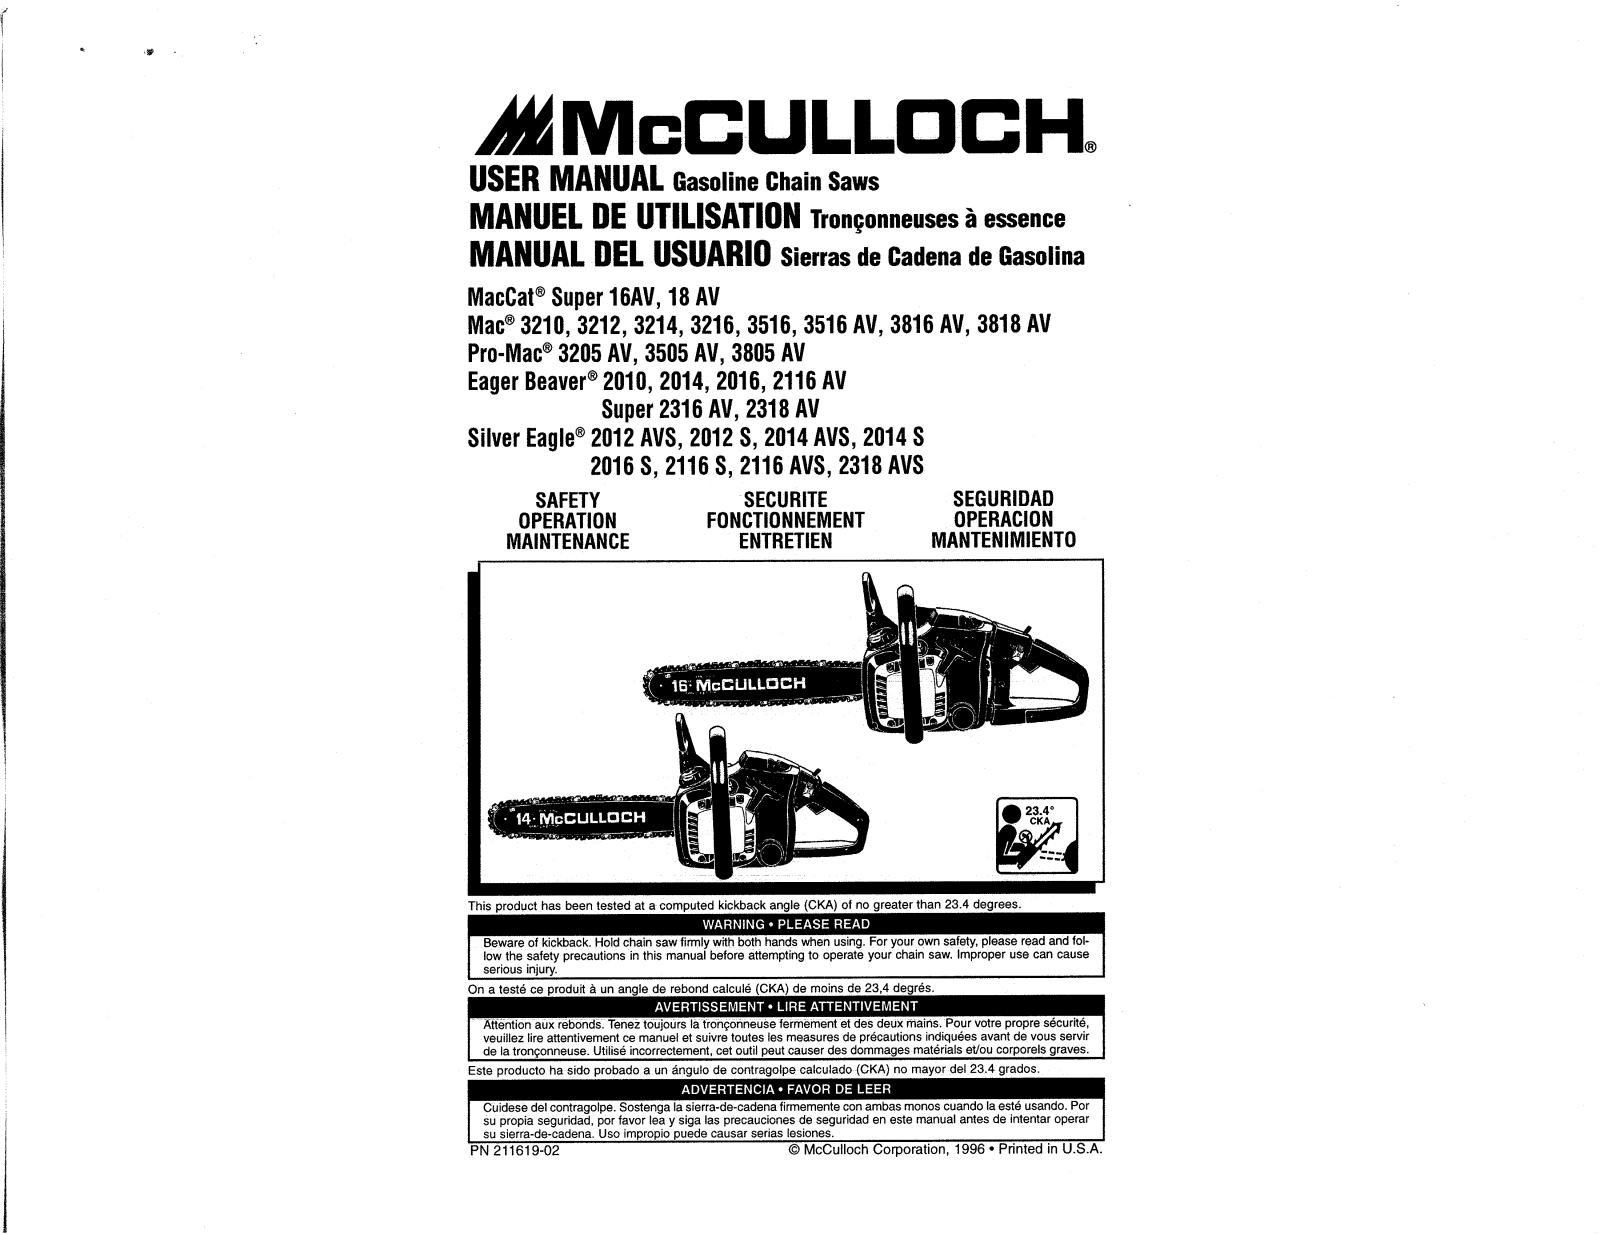 mcculloch MAC 3216, EAGER BEAVER 2316, MAC 3516, MACCAT 18, PROMAC 3205 user Manual